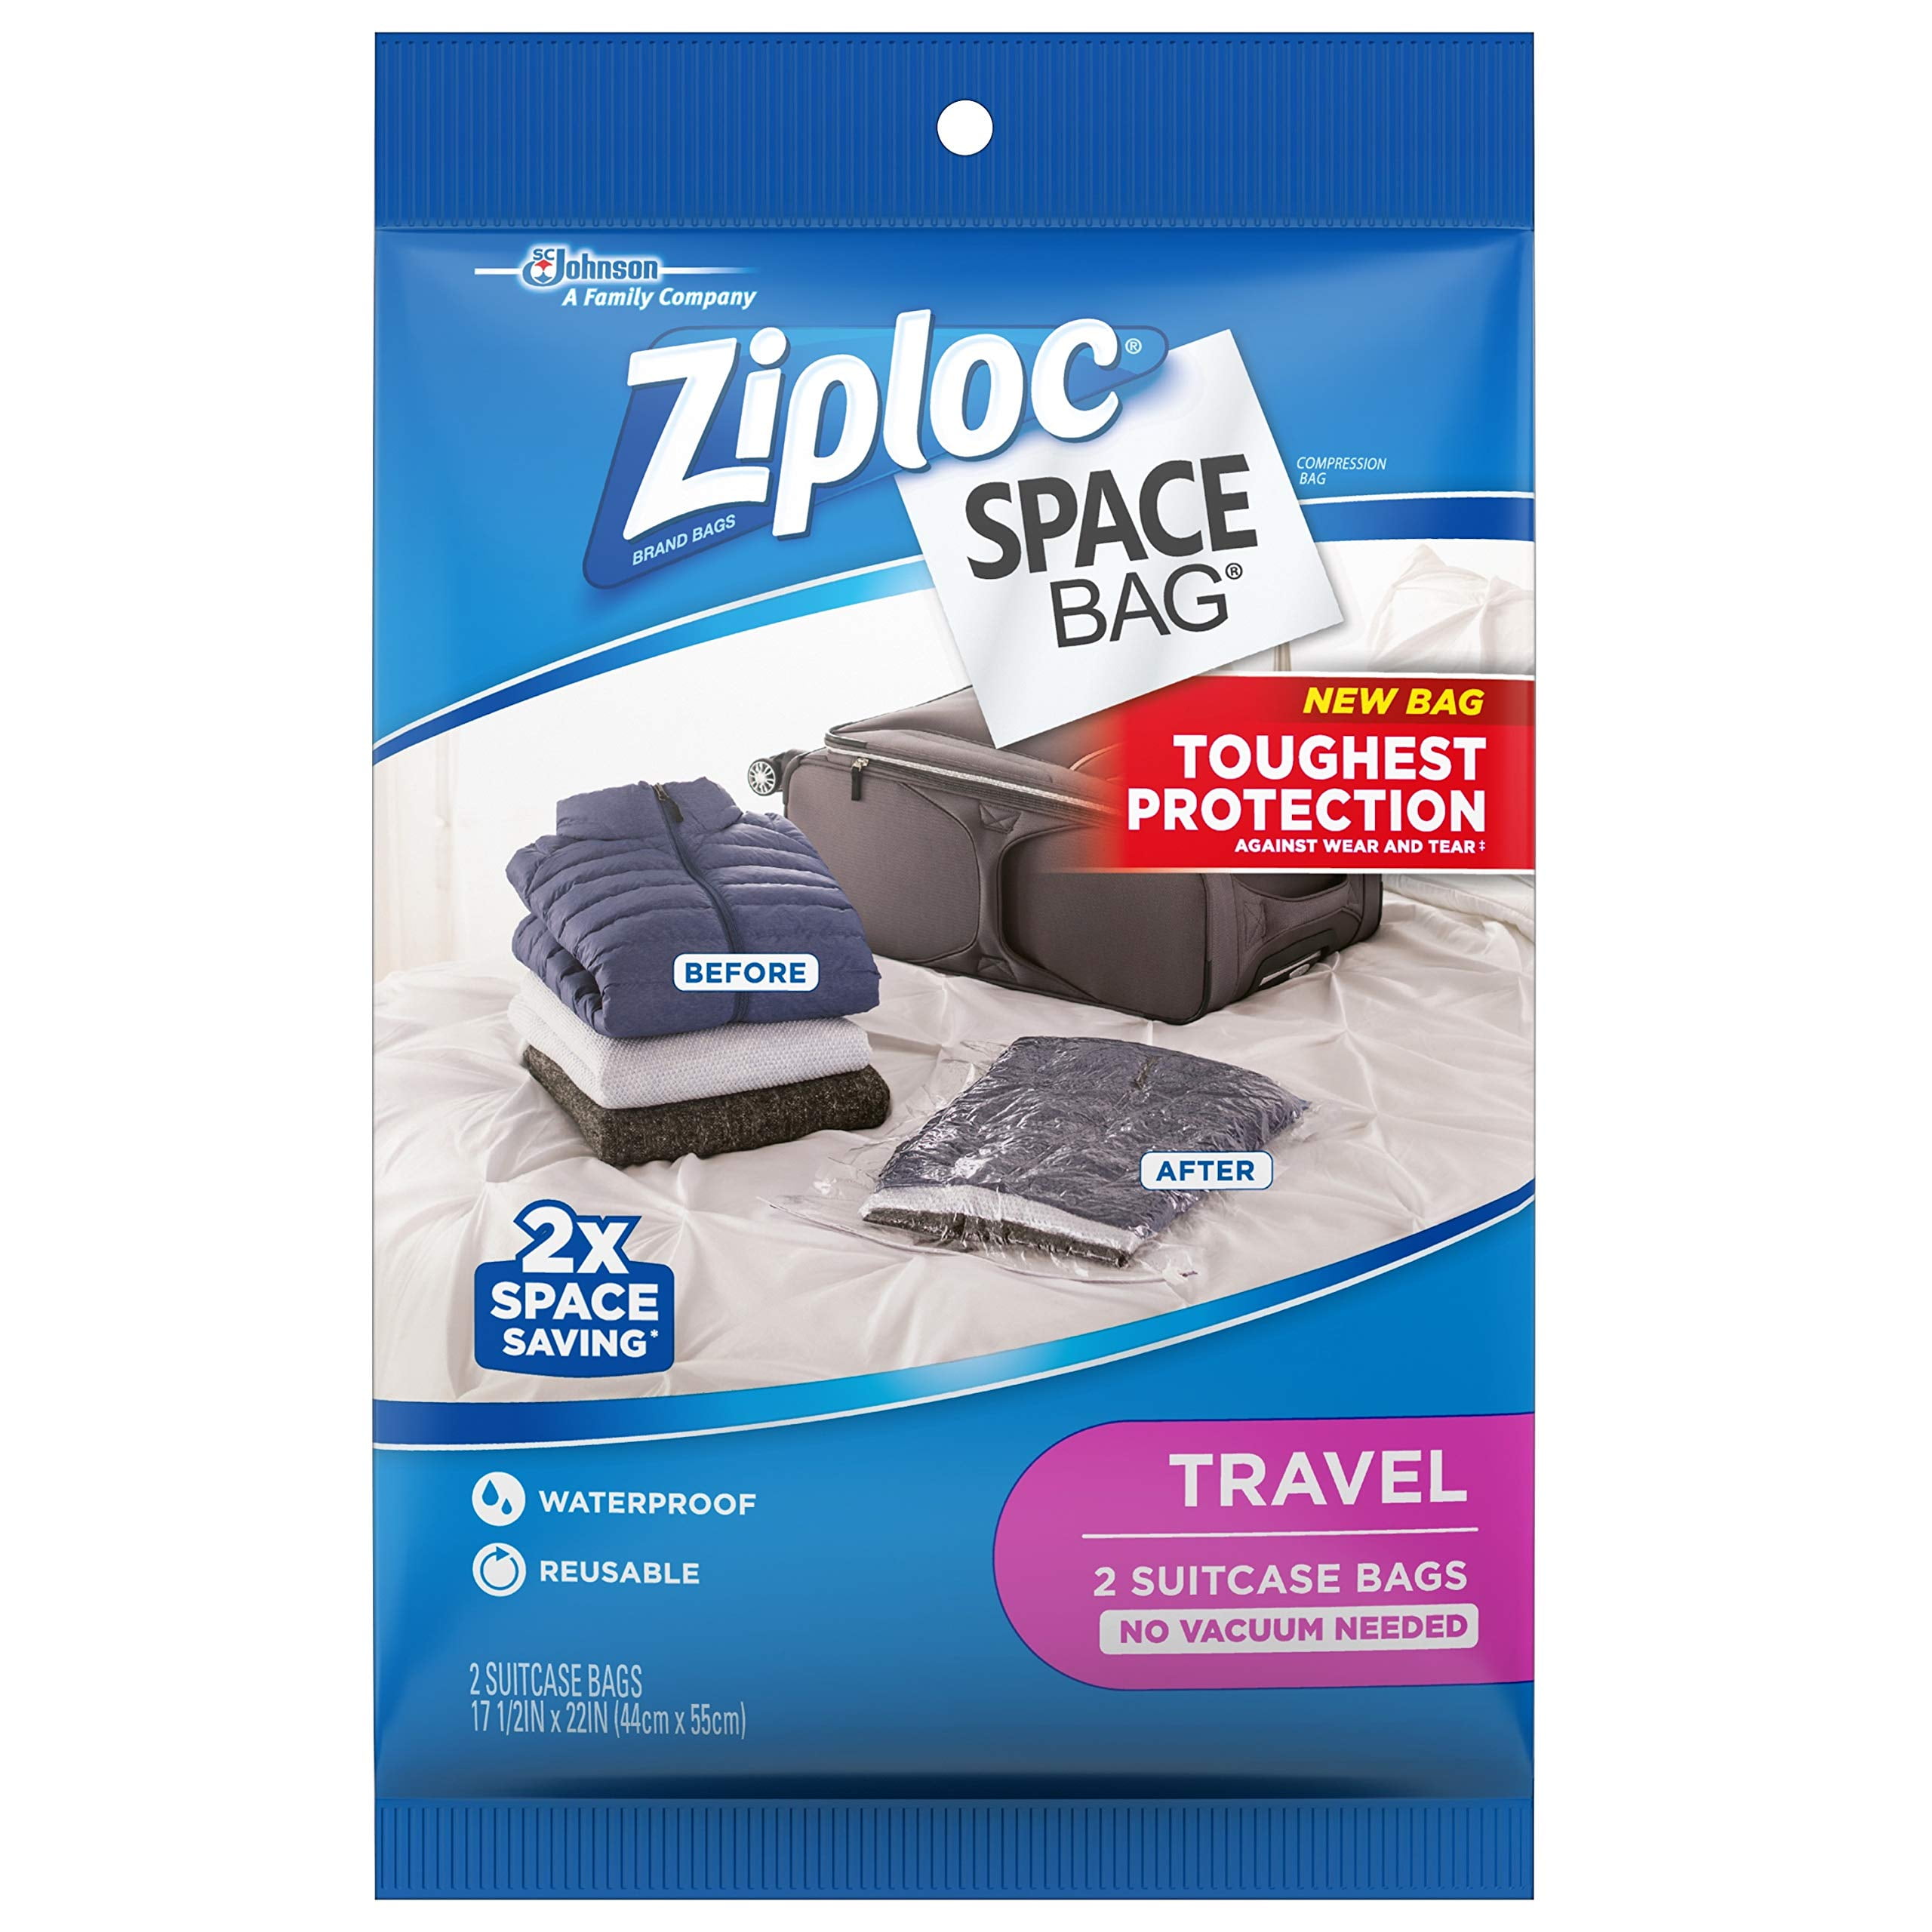 Ziploc Space Bag 2 Jumbo Bags 3x The Storage 35x48 Vacuum